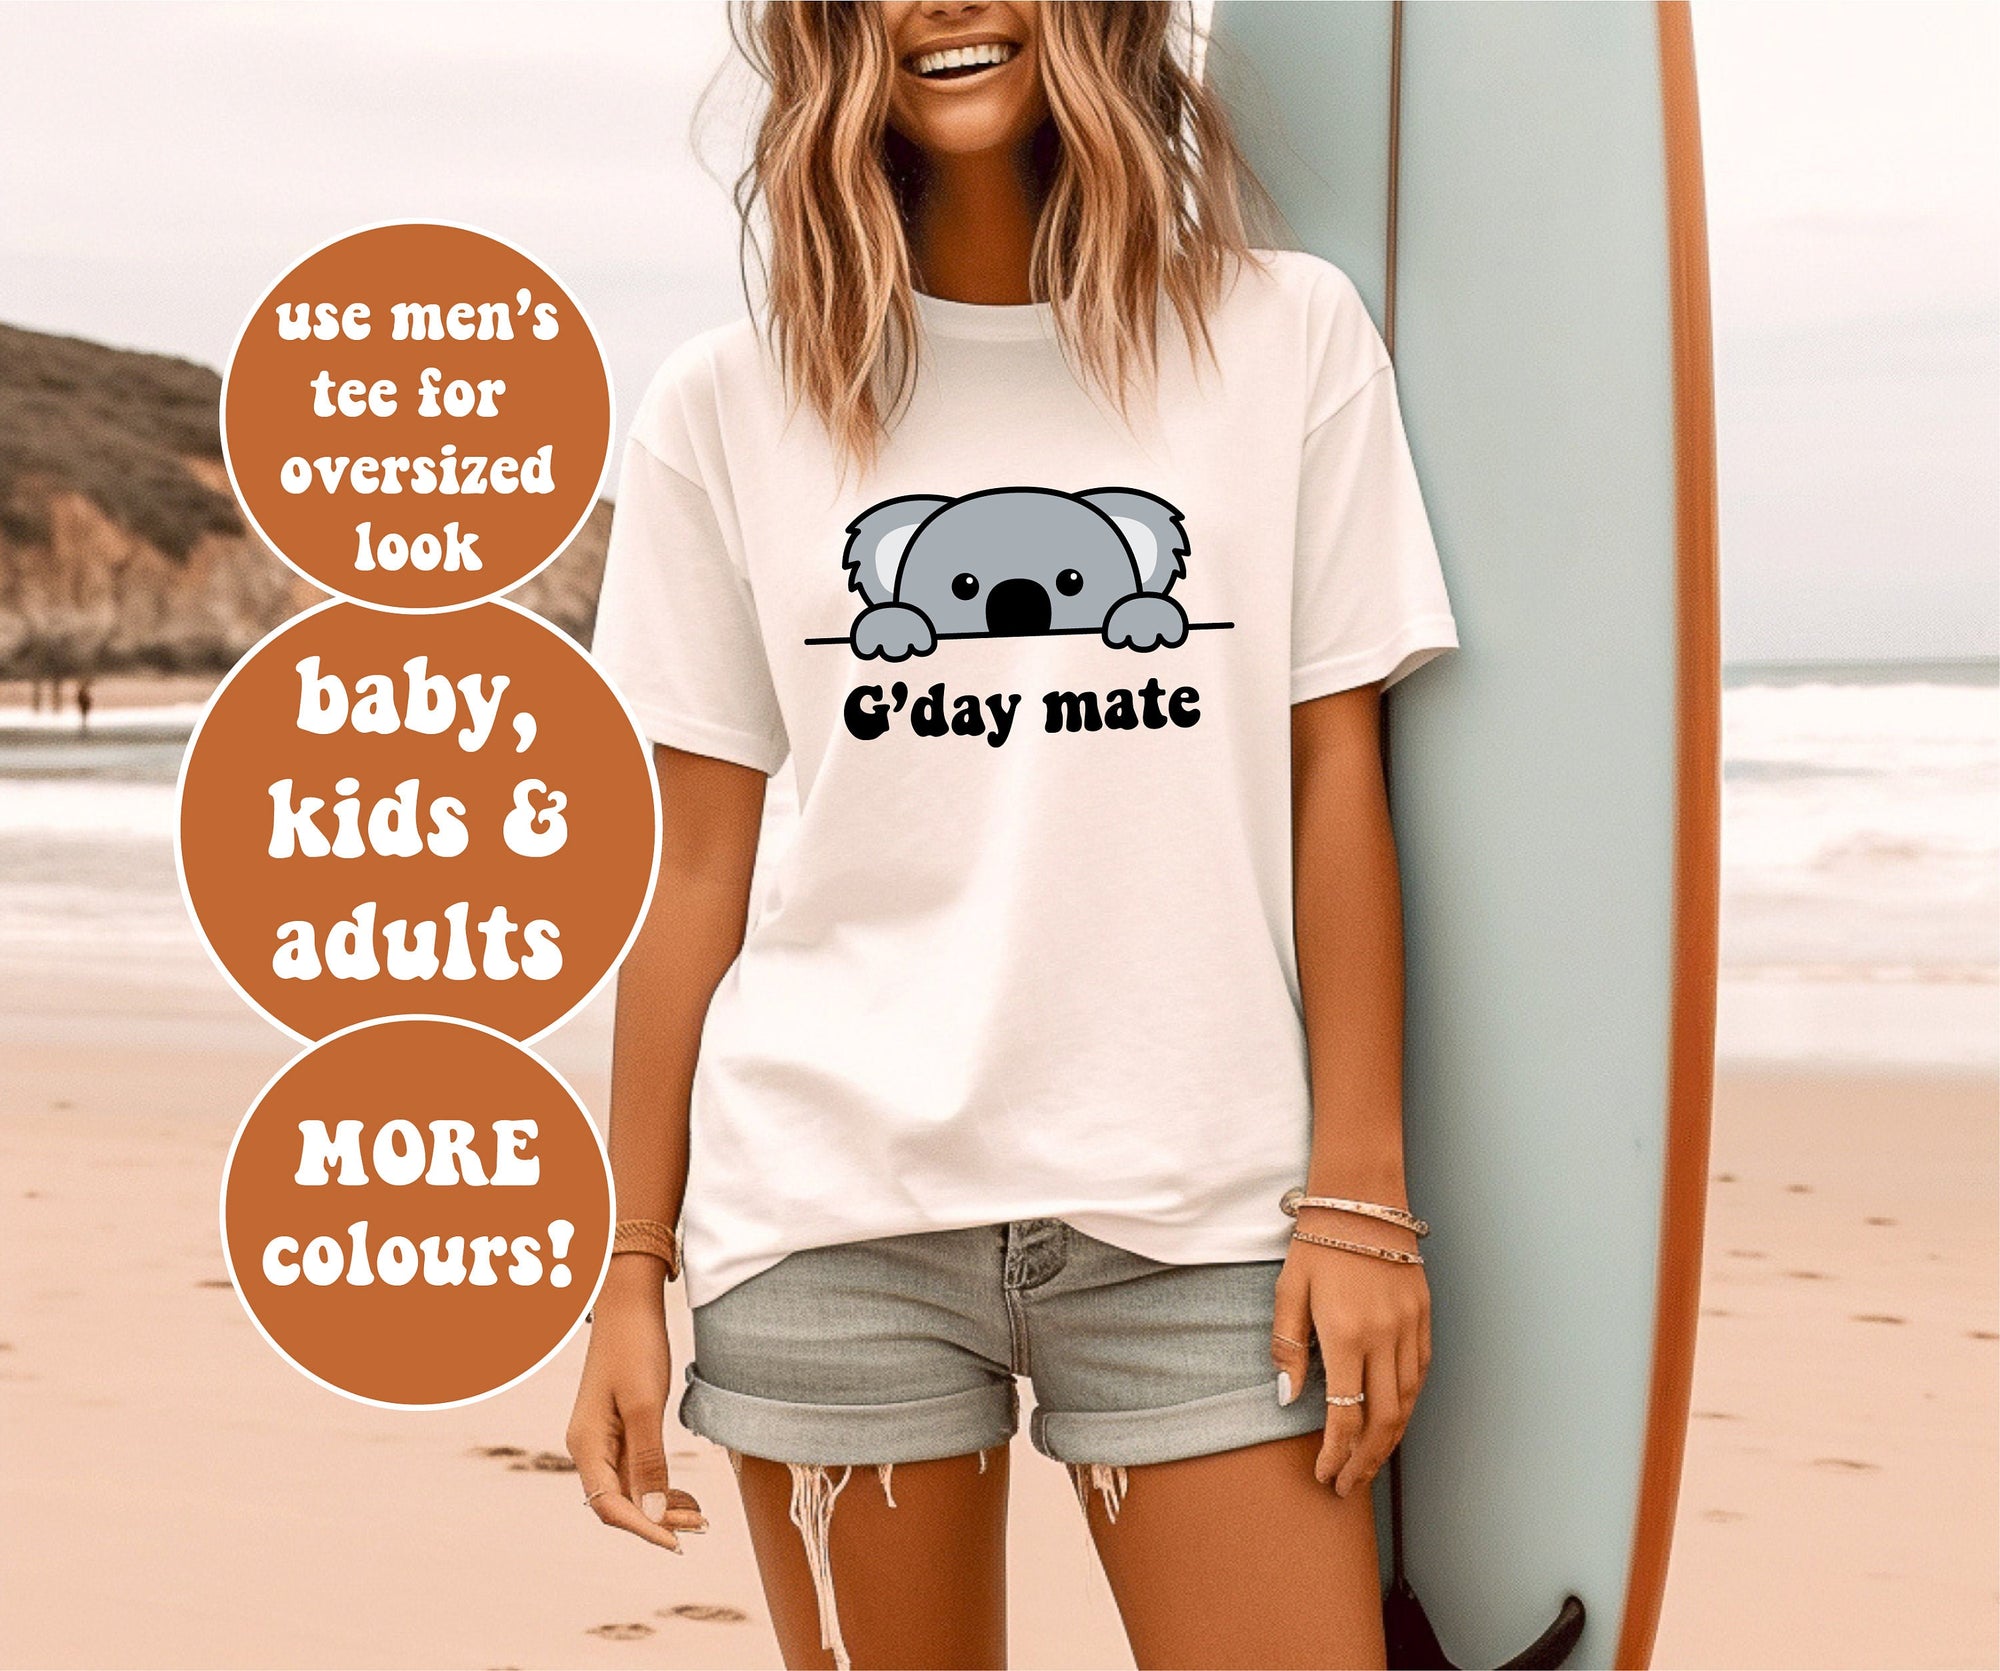 G'day Mate T-Shirt, Australia Day T-Shirt, Aussie Slang T-Shirt, Aussie Slogan T-Shirt, Funny Australia T-Shirt, Australiana, Australian